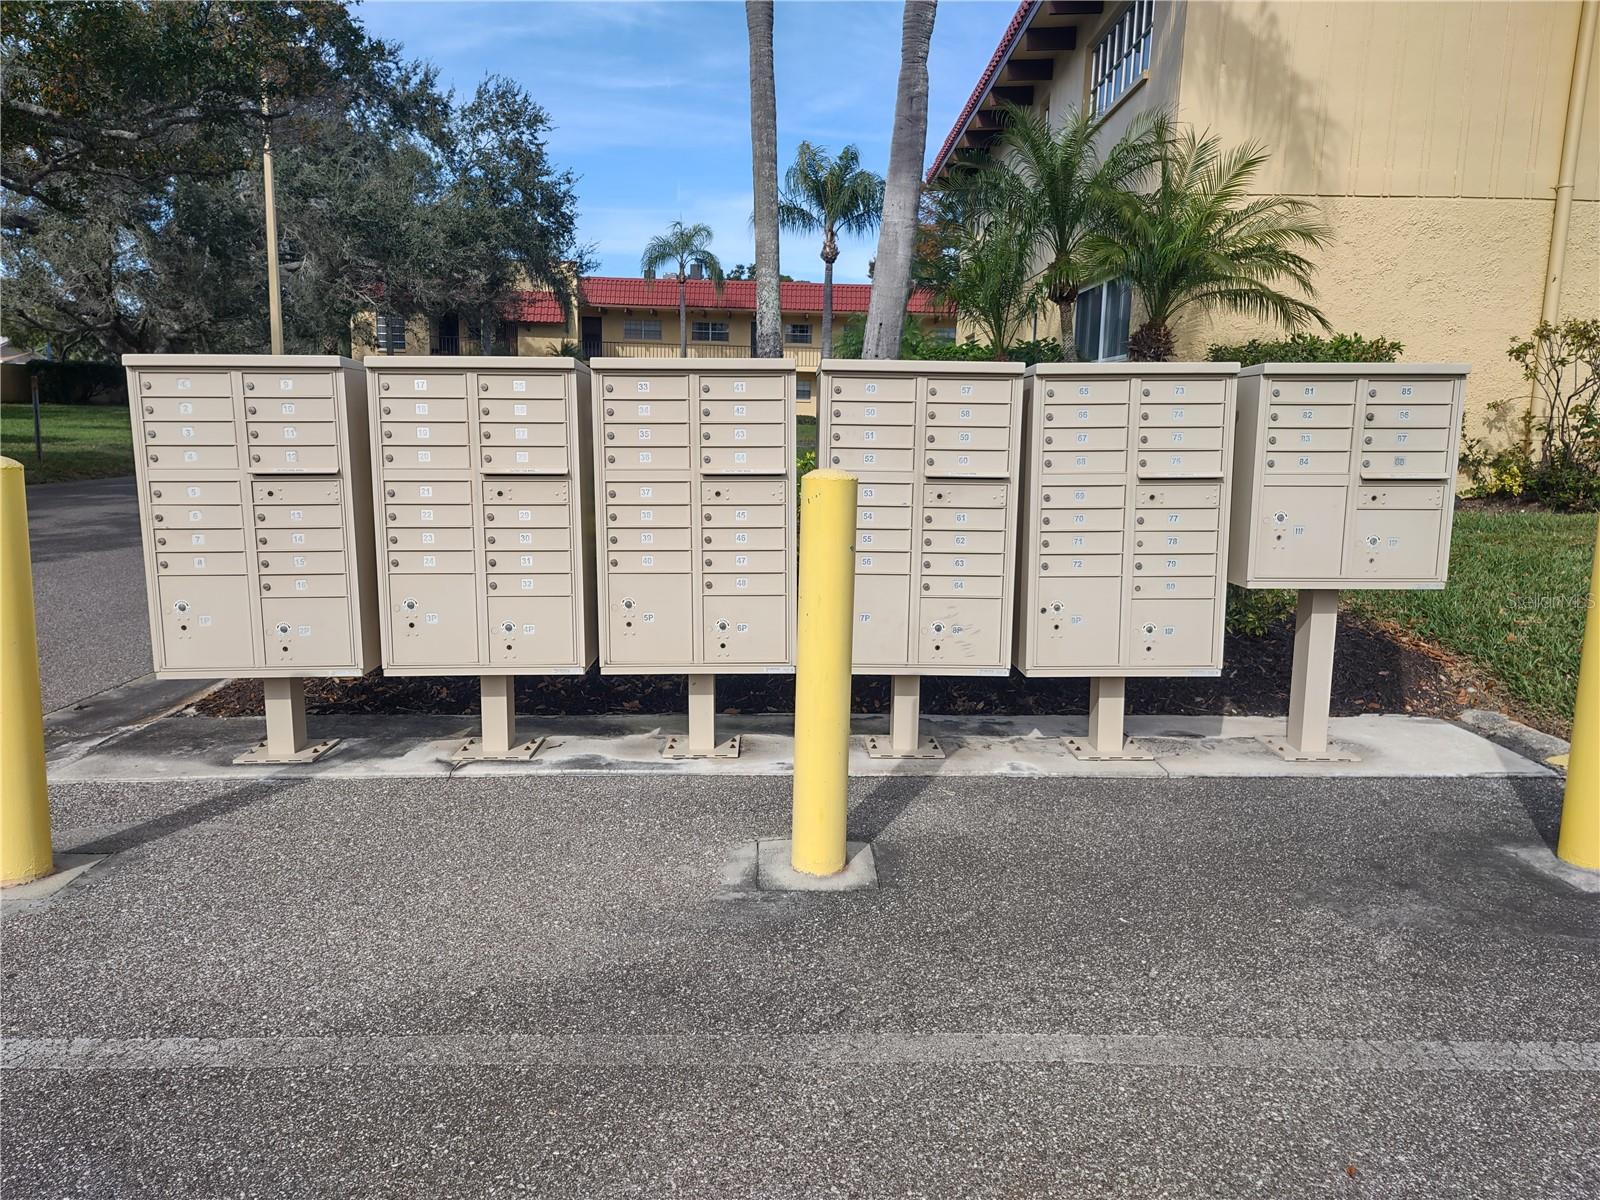 Community mailbox a short walk from unit